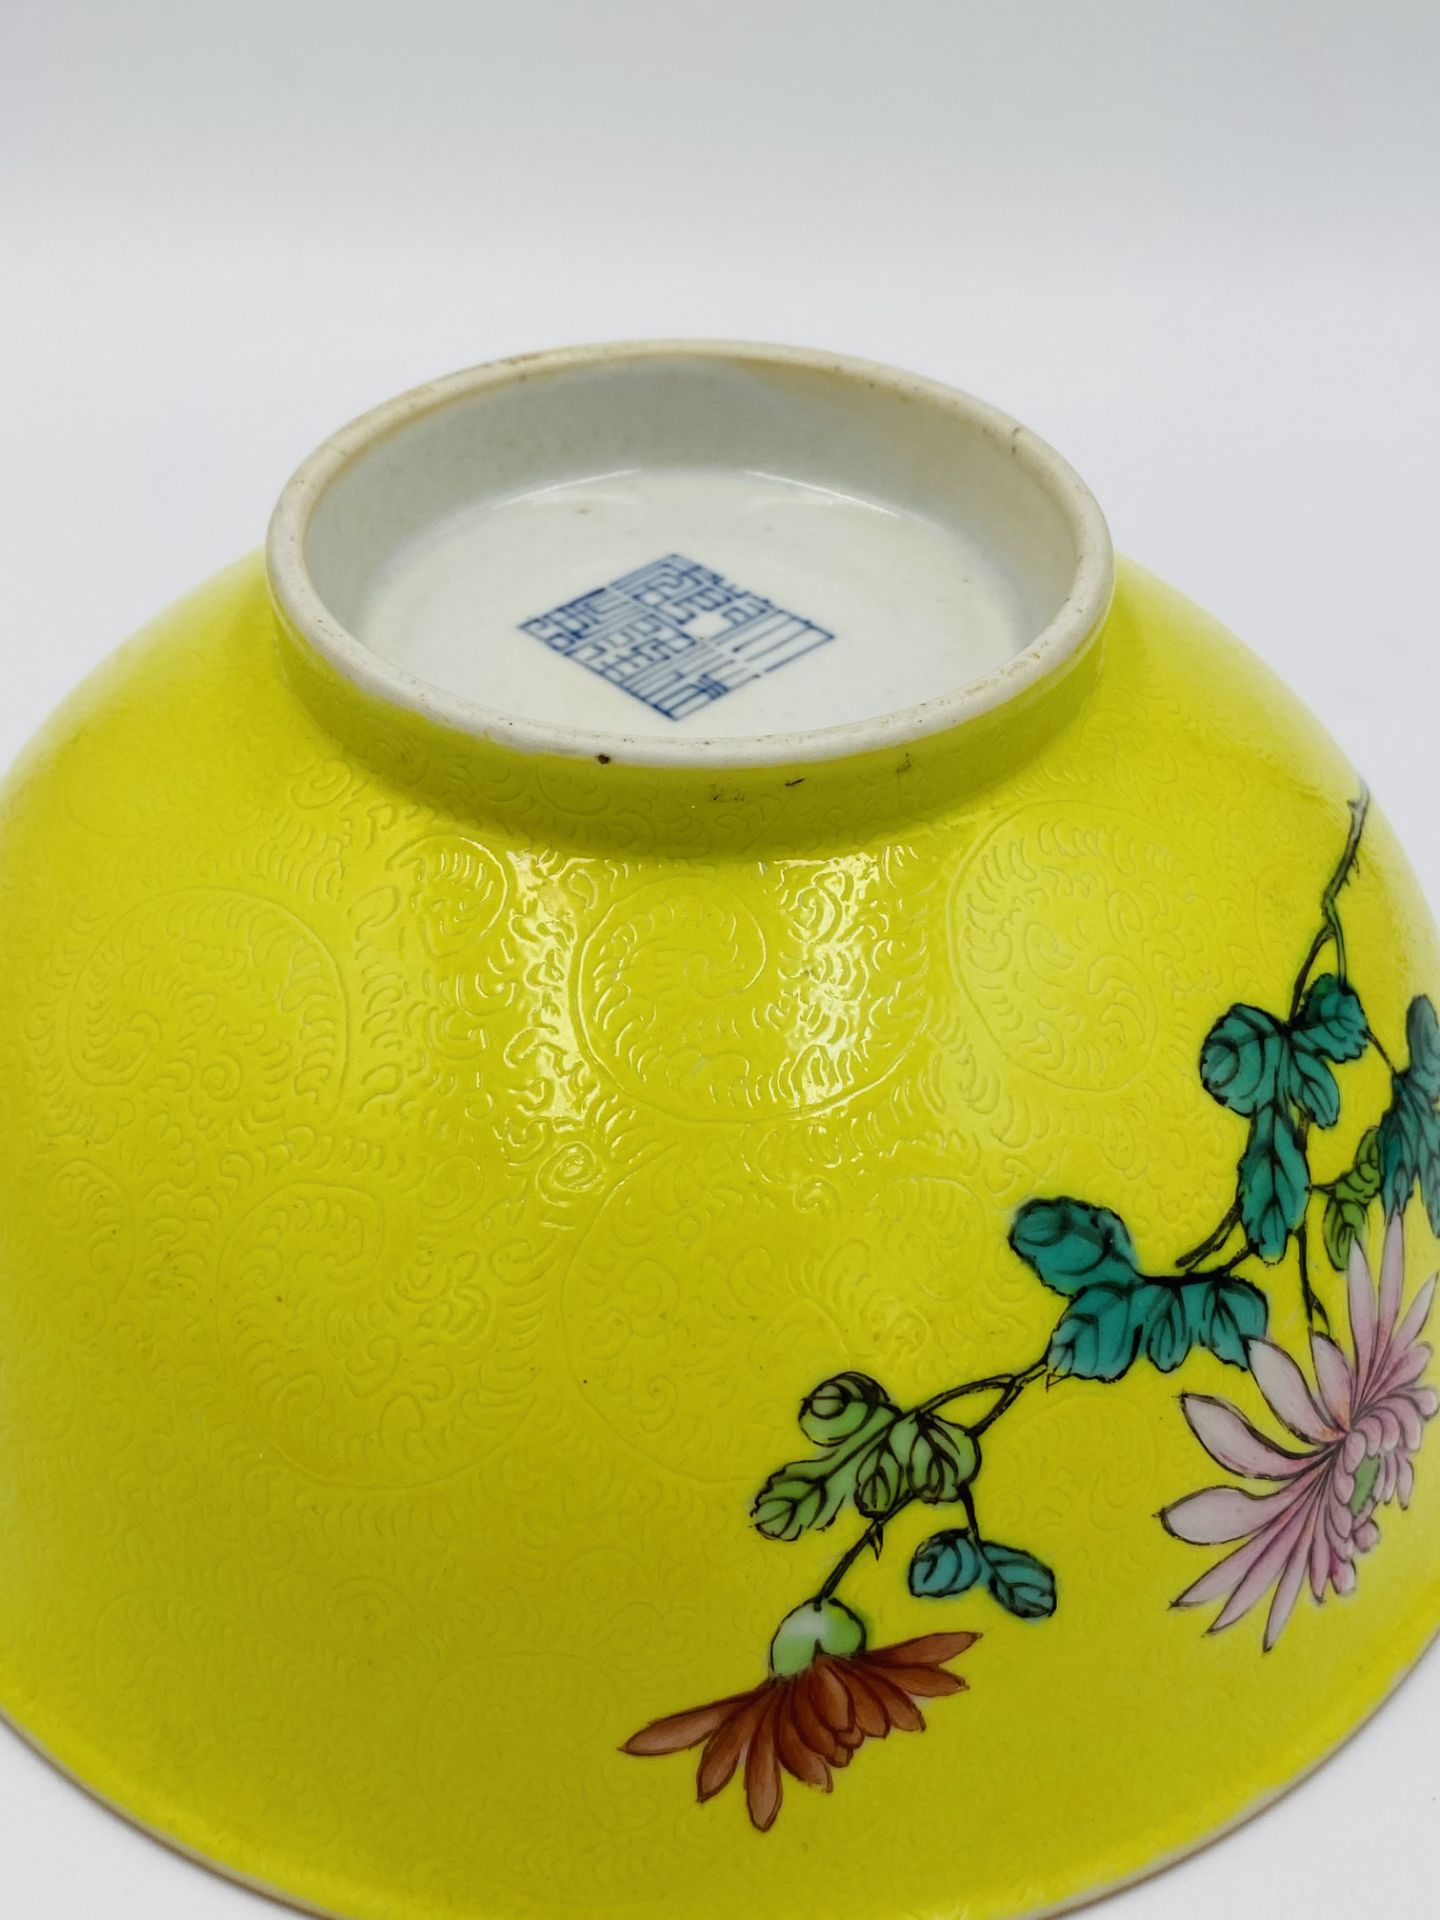 Chinese sgraffito lemon yellow ground bowl - Image 3 of 3